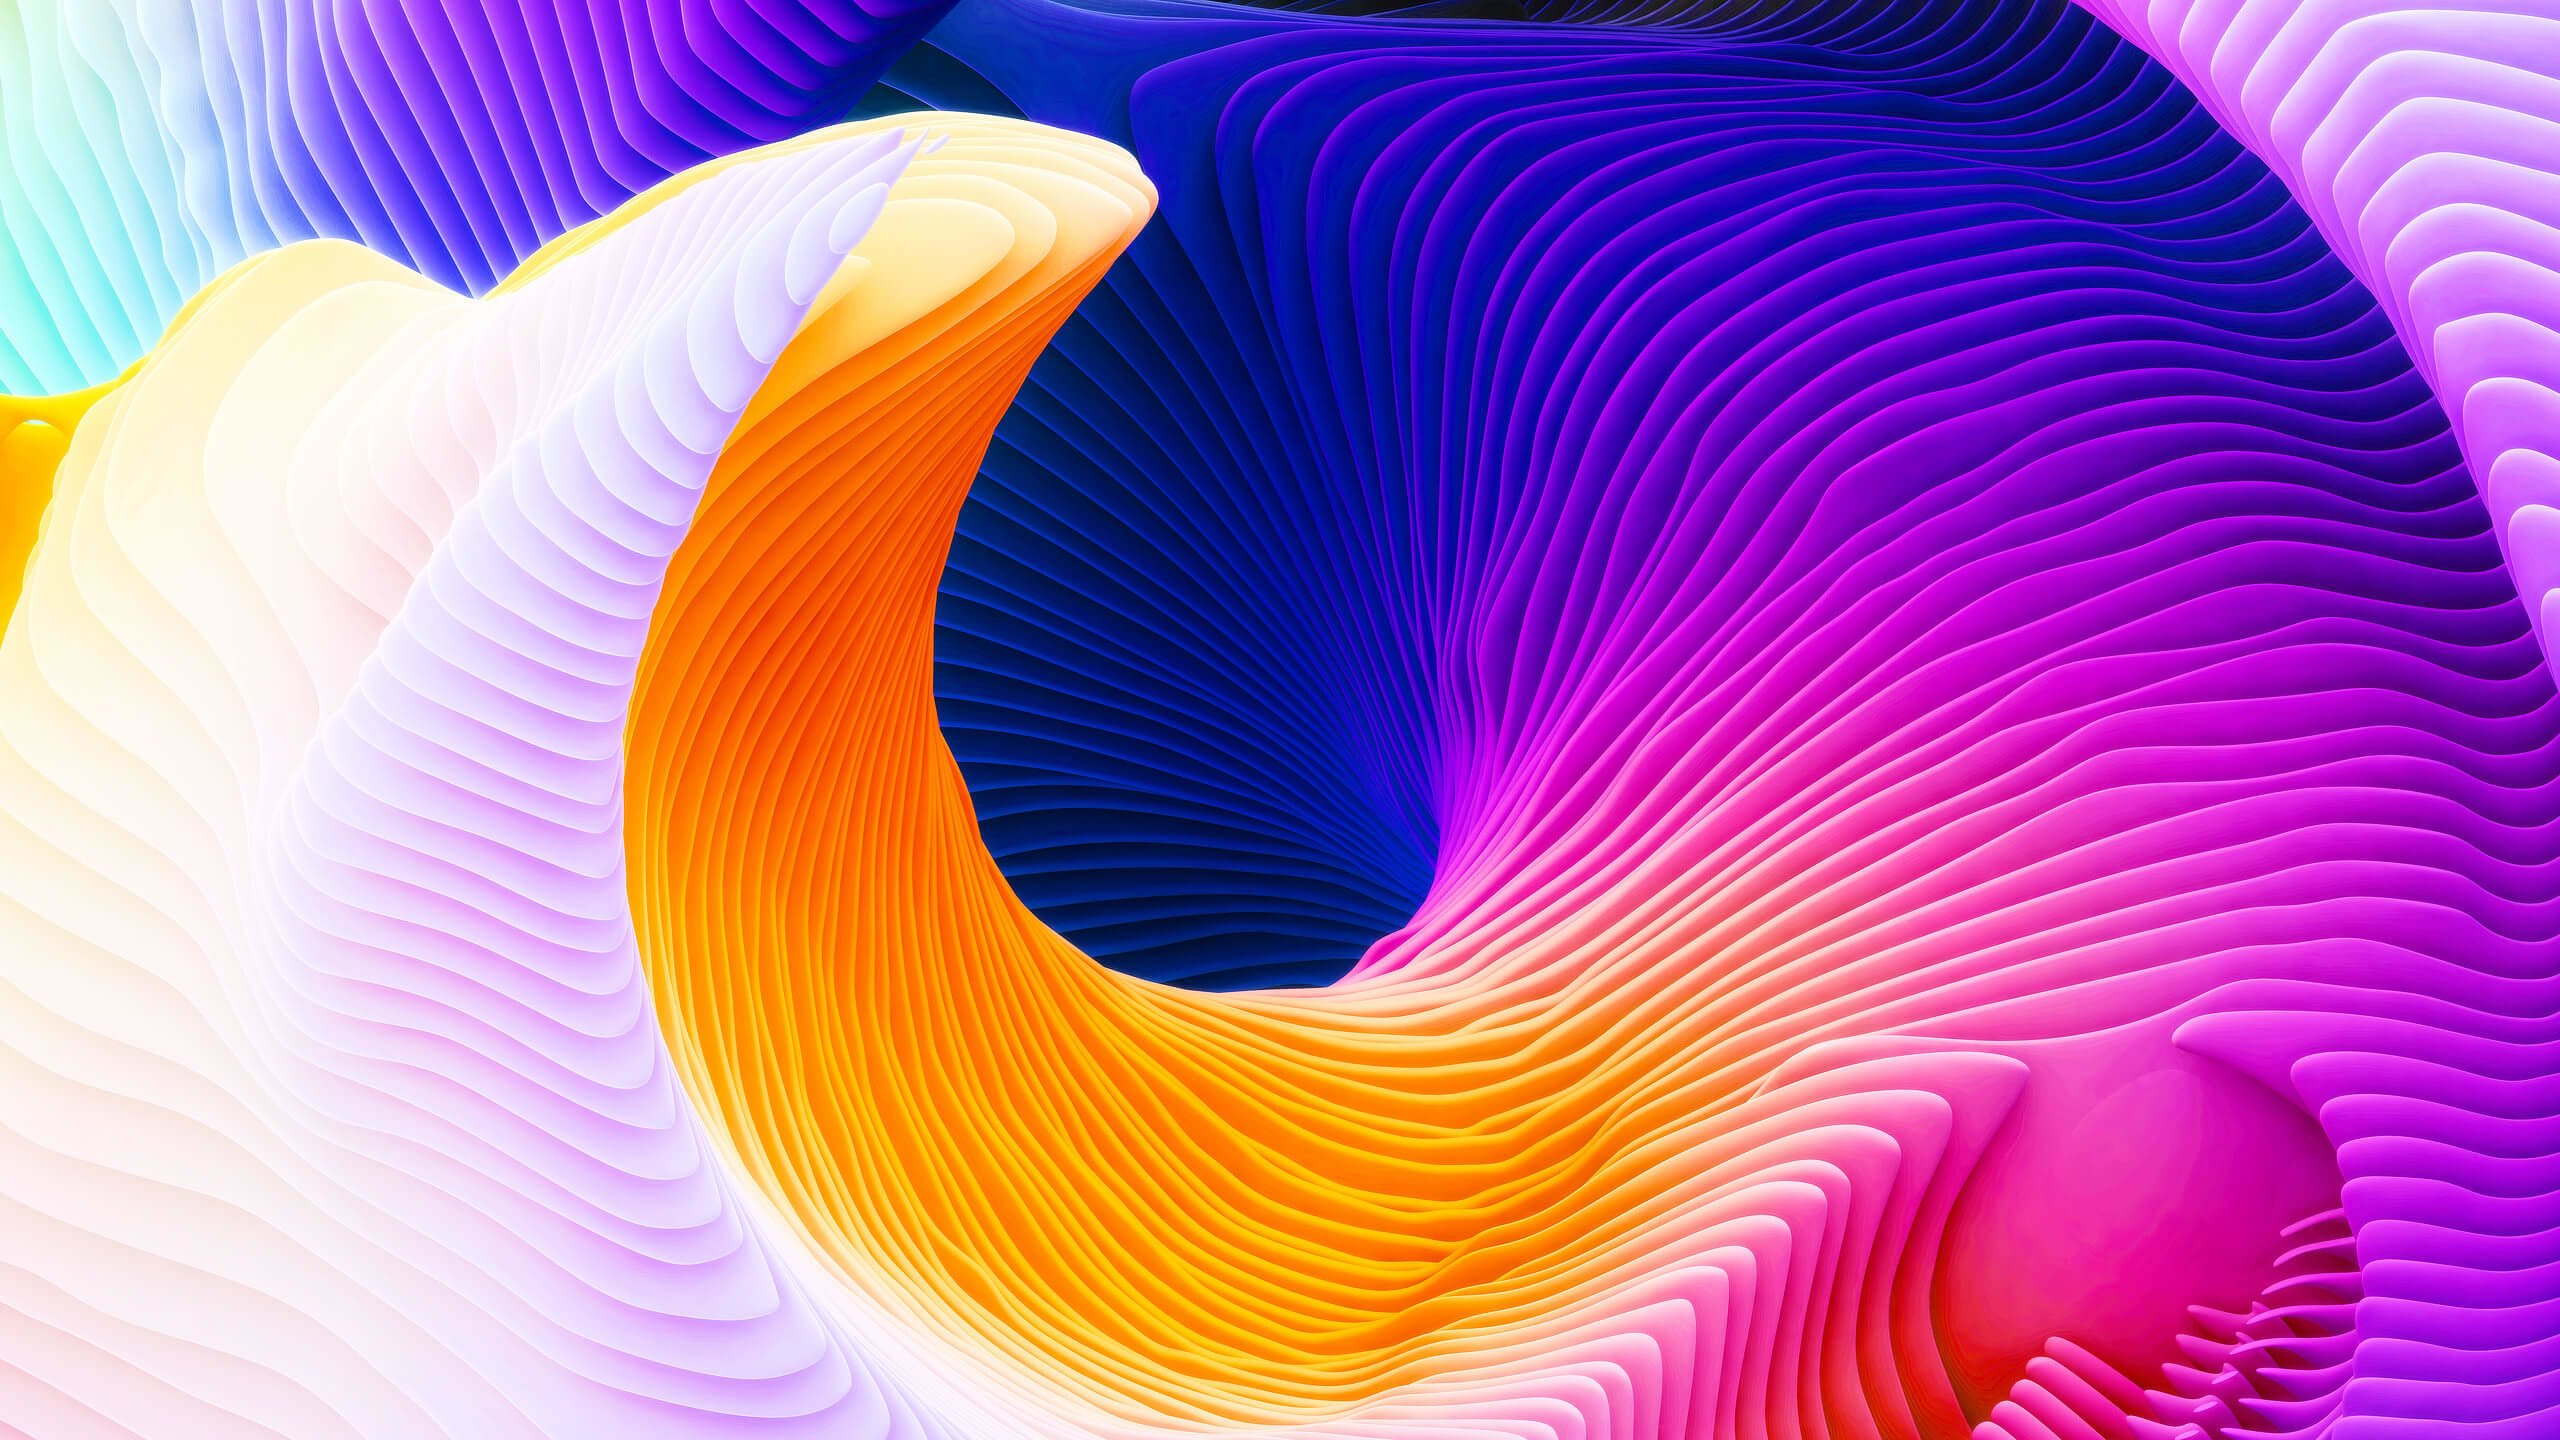 Colorful Spiral Wallpaper for Social Media YouTube Channel Art